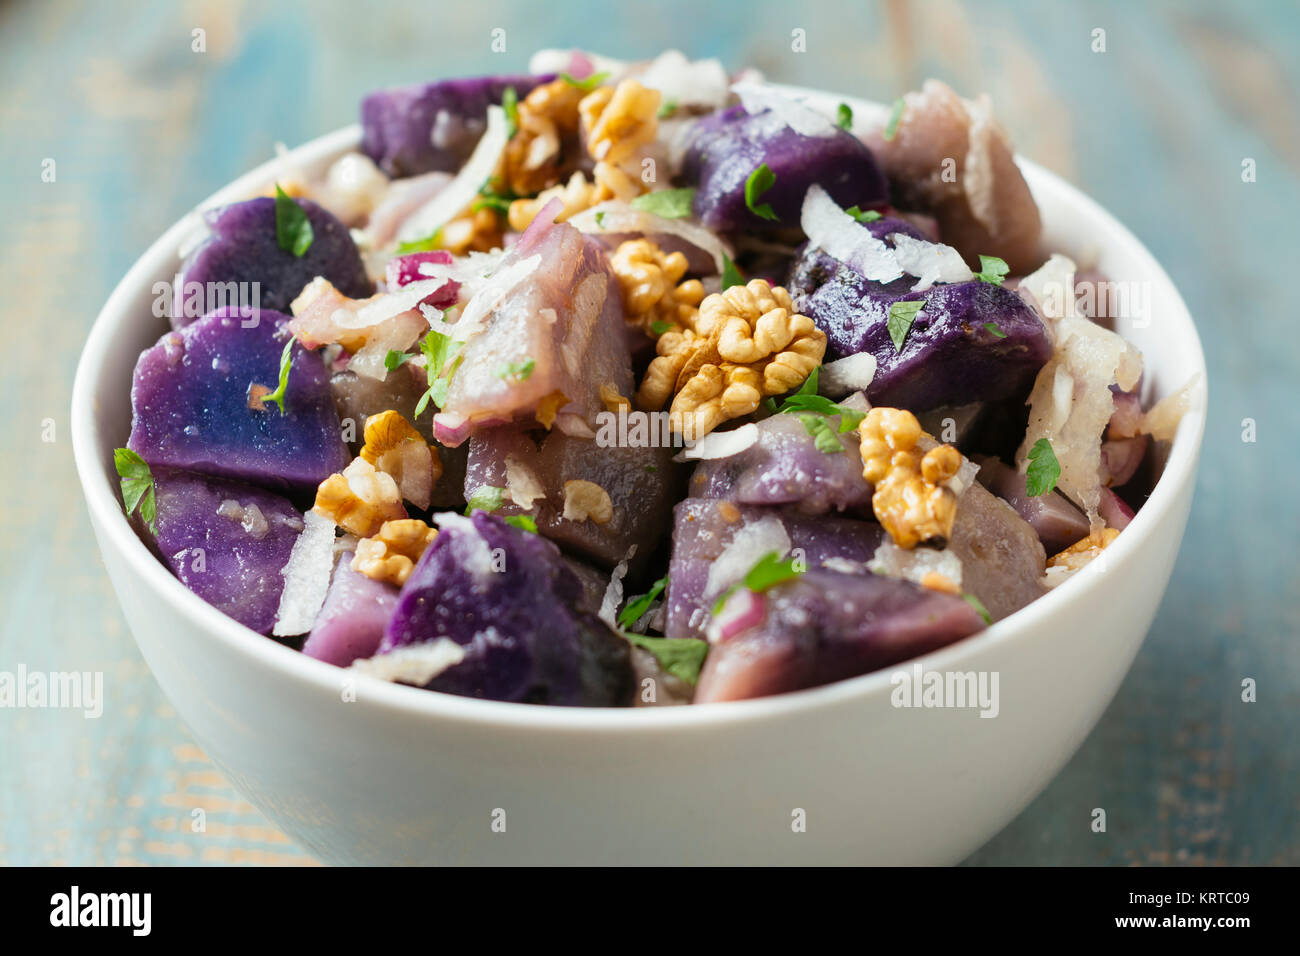 Purple Potato Salad with Grated Radish and Walnuts Stock Photo